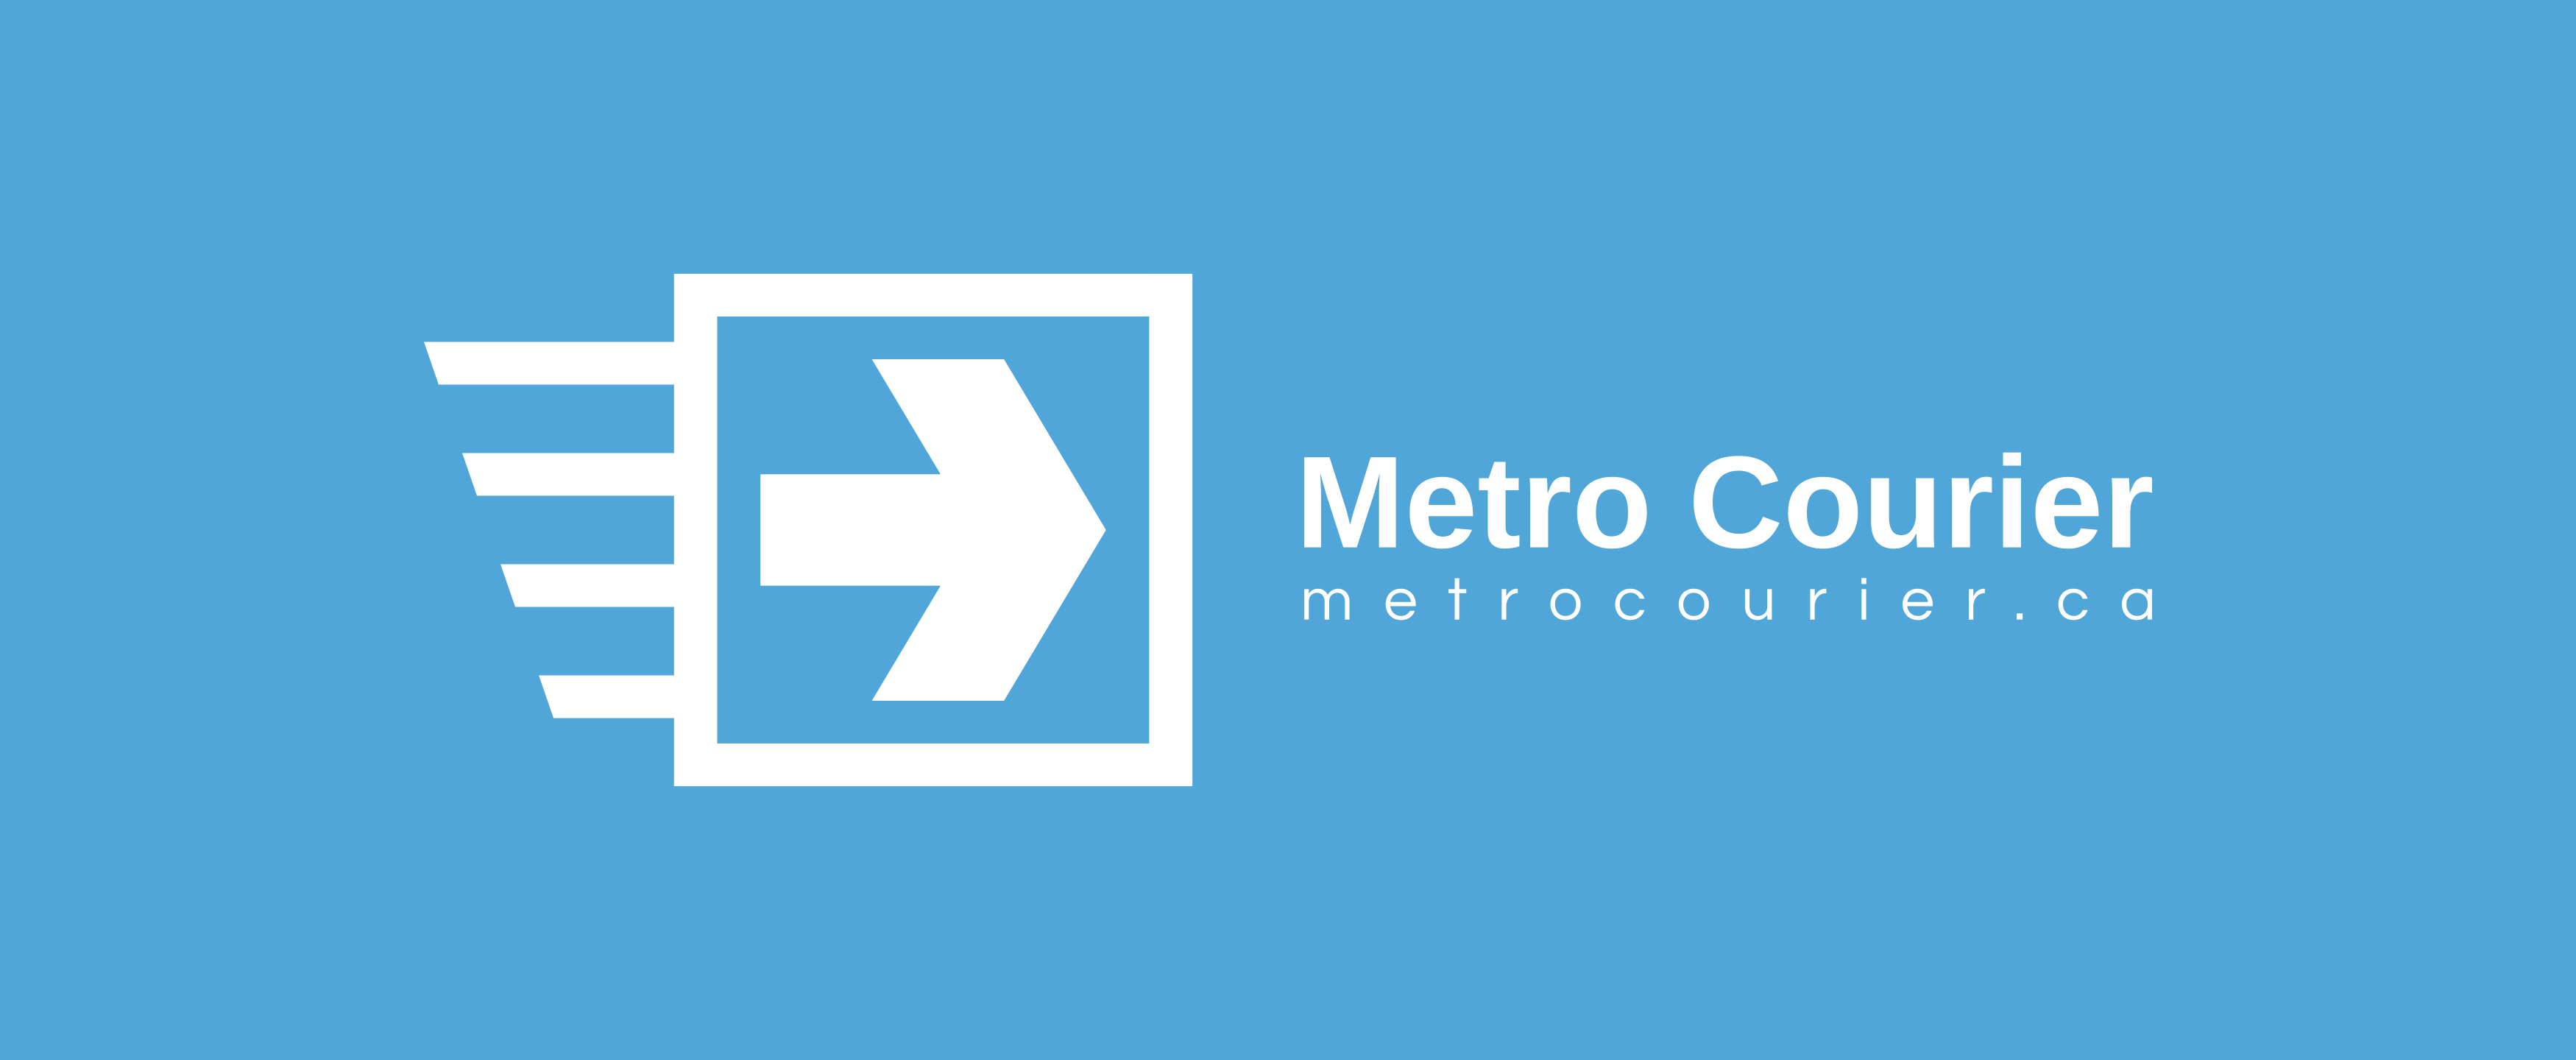 Metro Courier